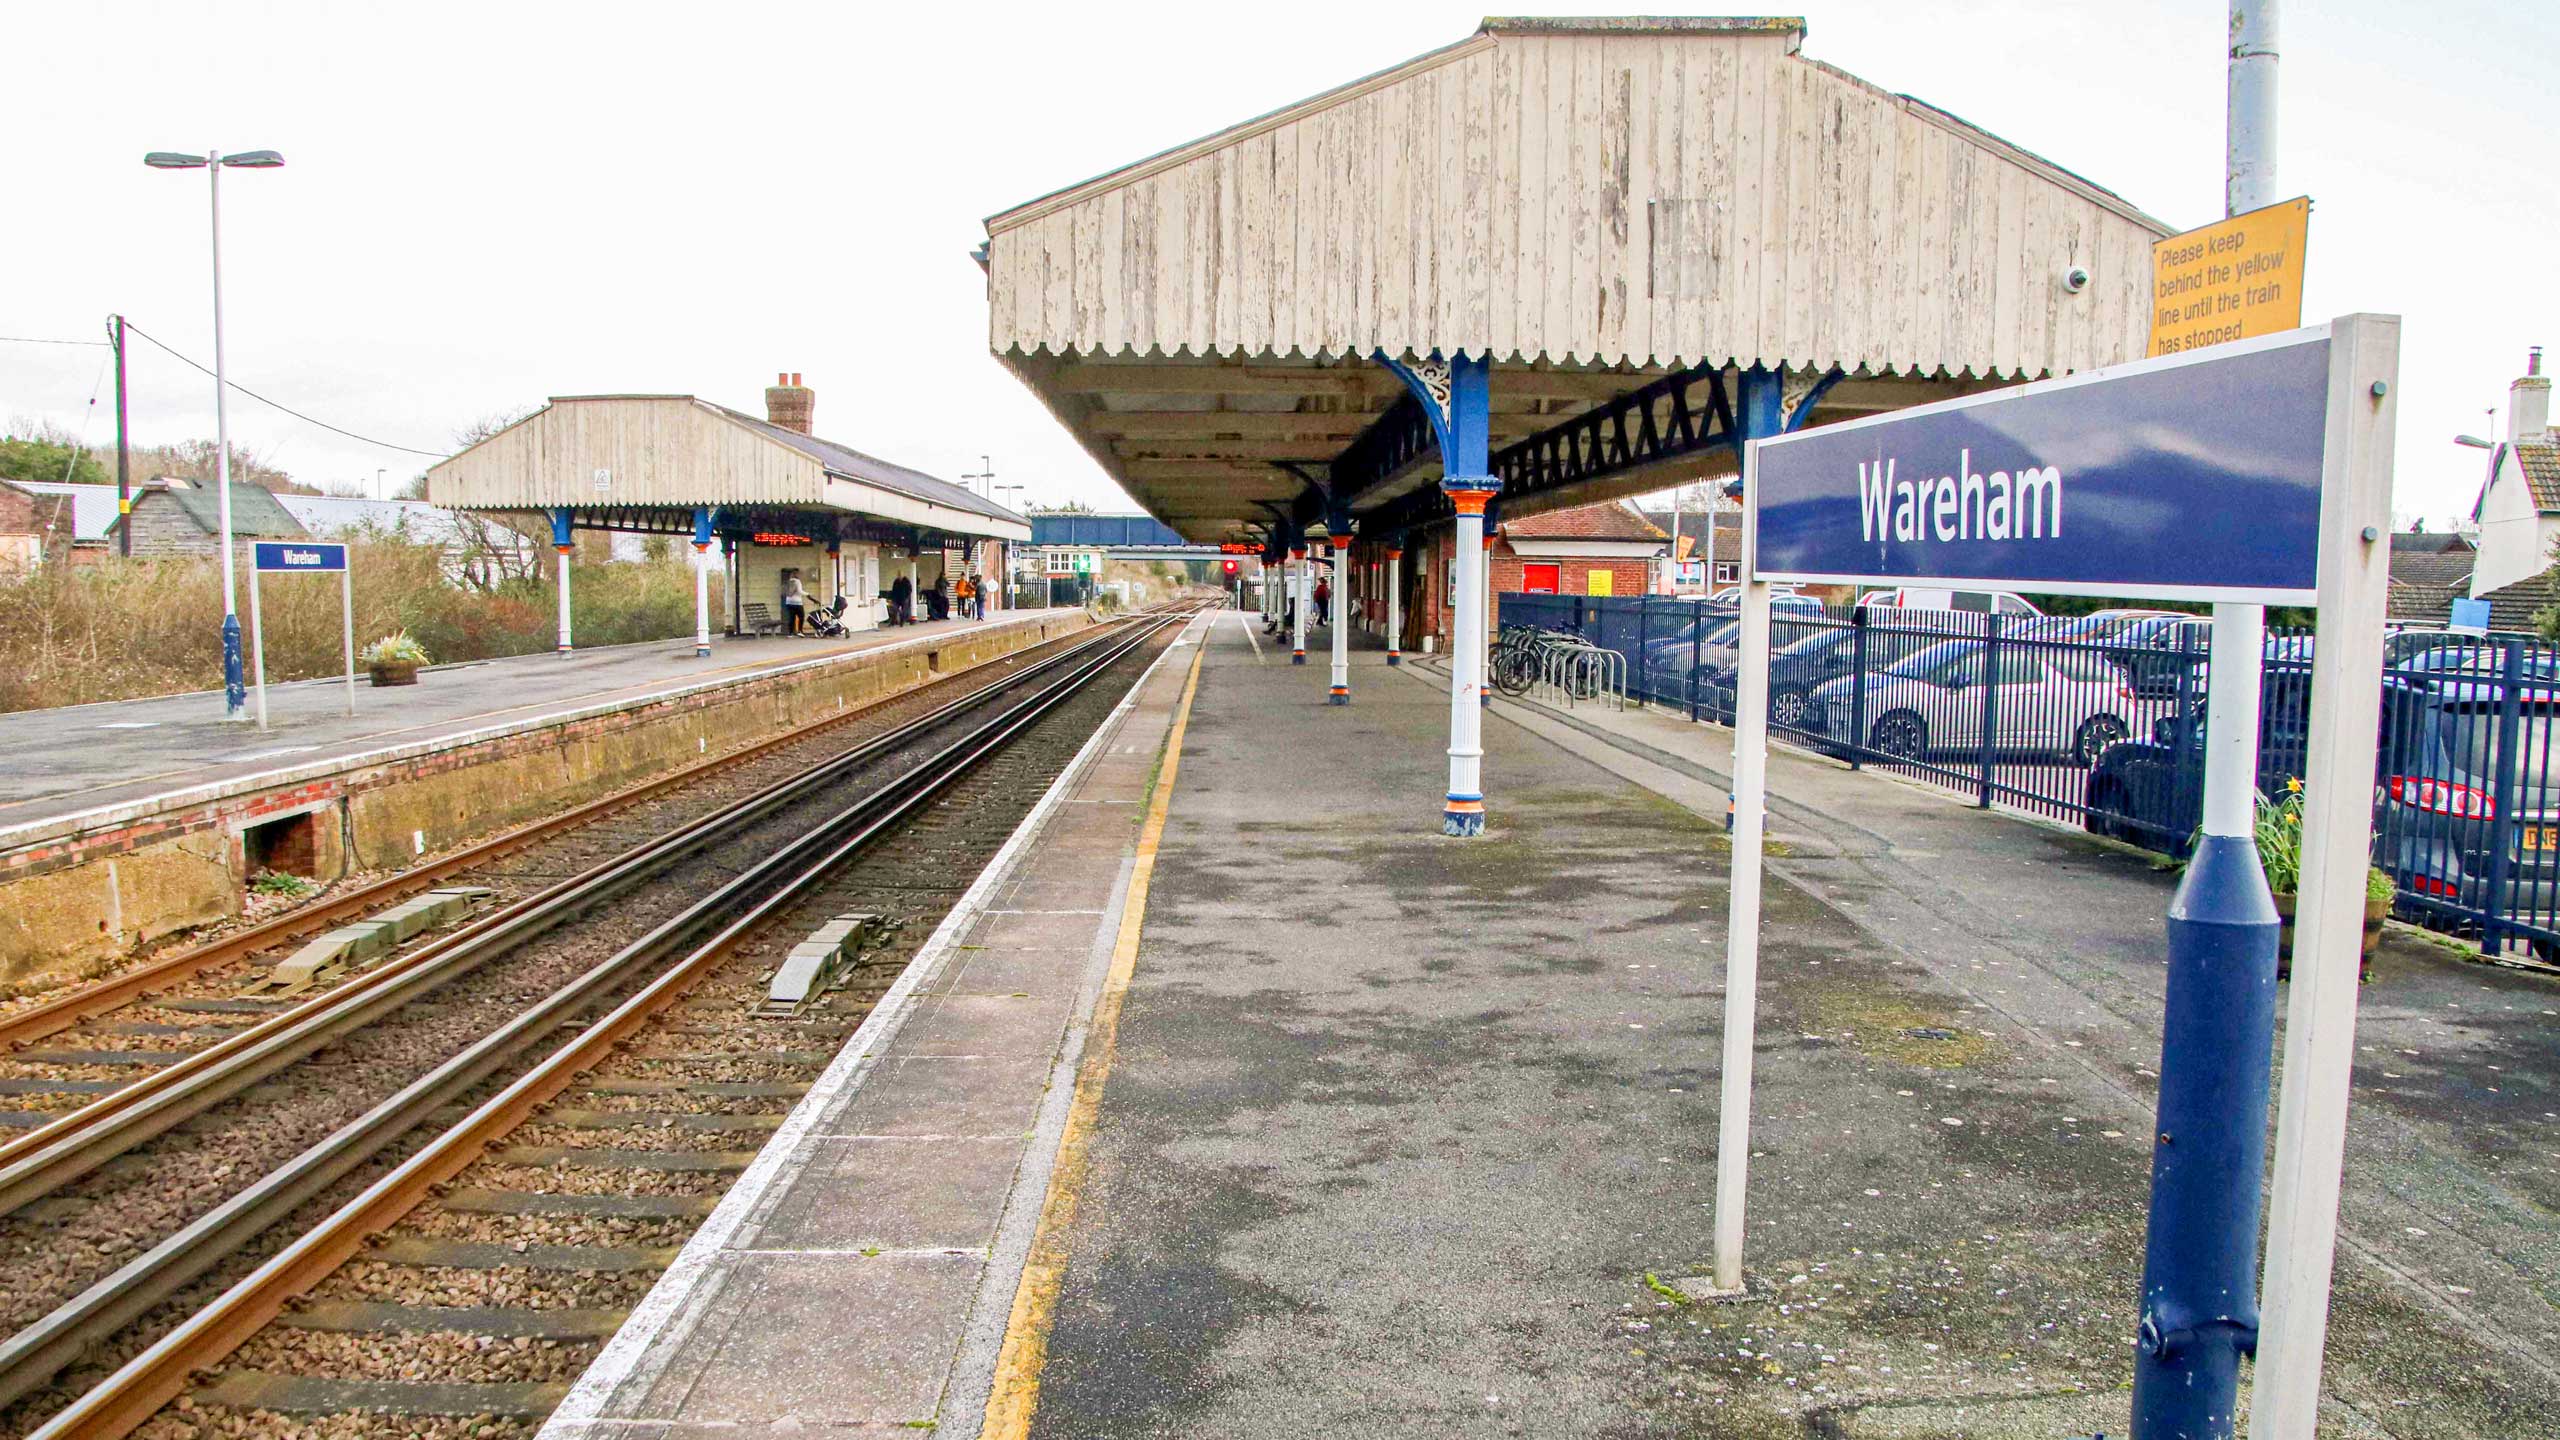 Purbeck Community Rail Partnership Wareham Train Station 007 2560x1440px